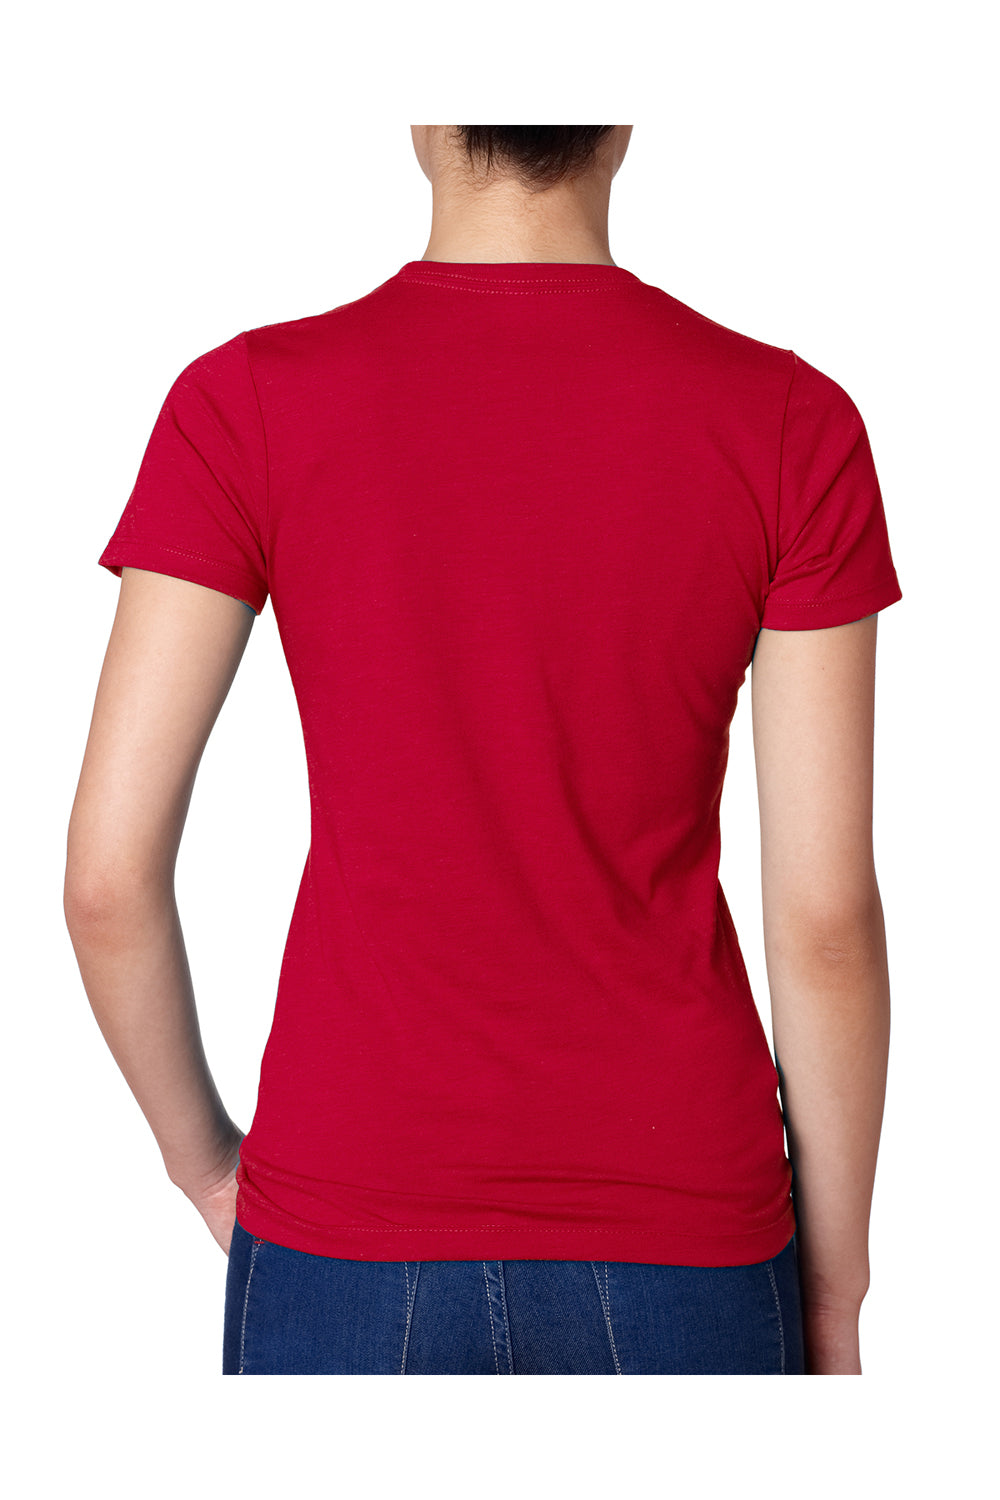 Next Level 6610 Womens CVC Jersey Short Sleeve Crewneck T-Shirt Scarlet Red Back